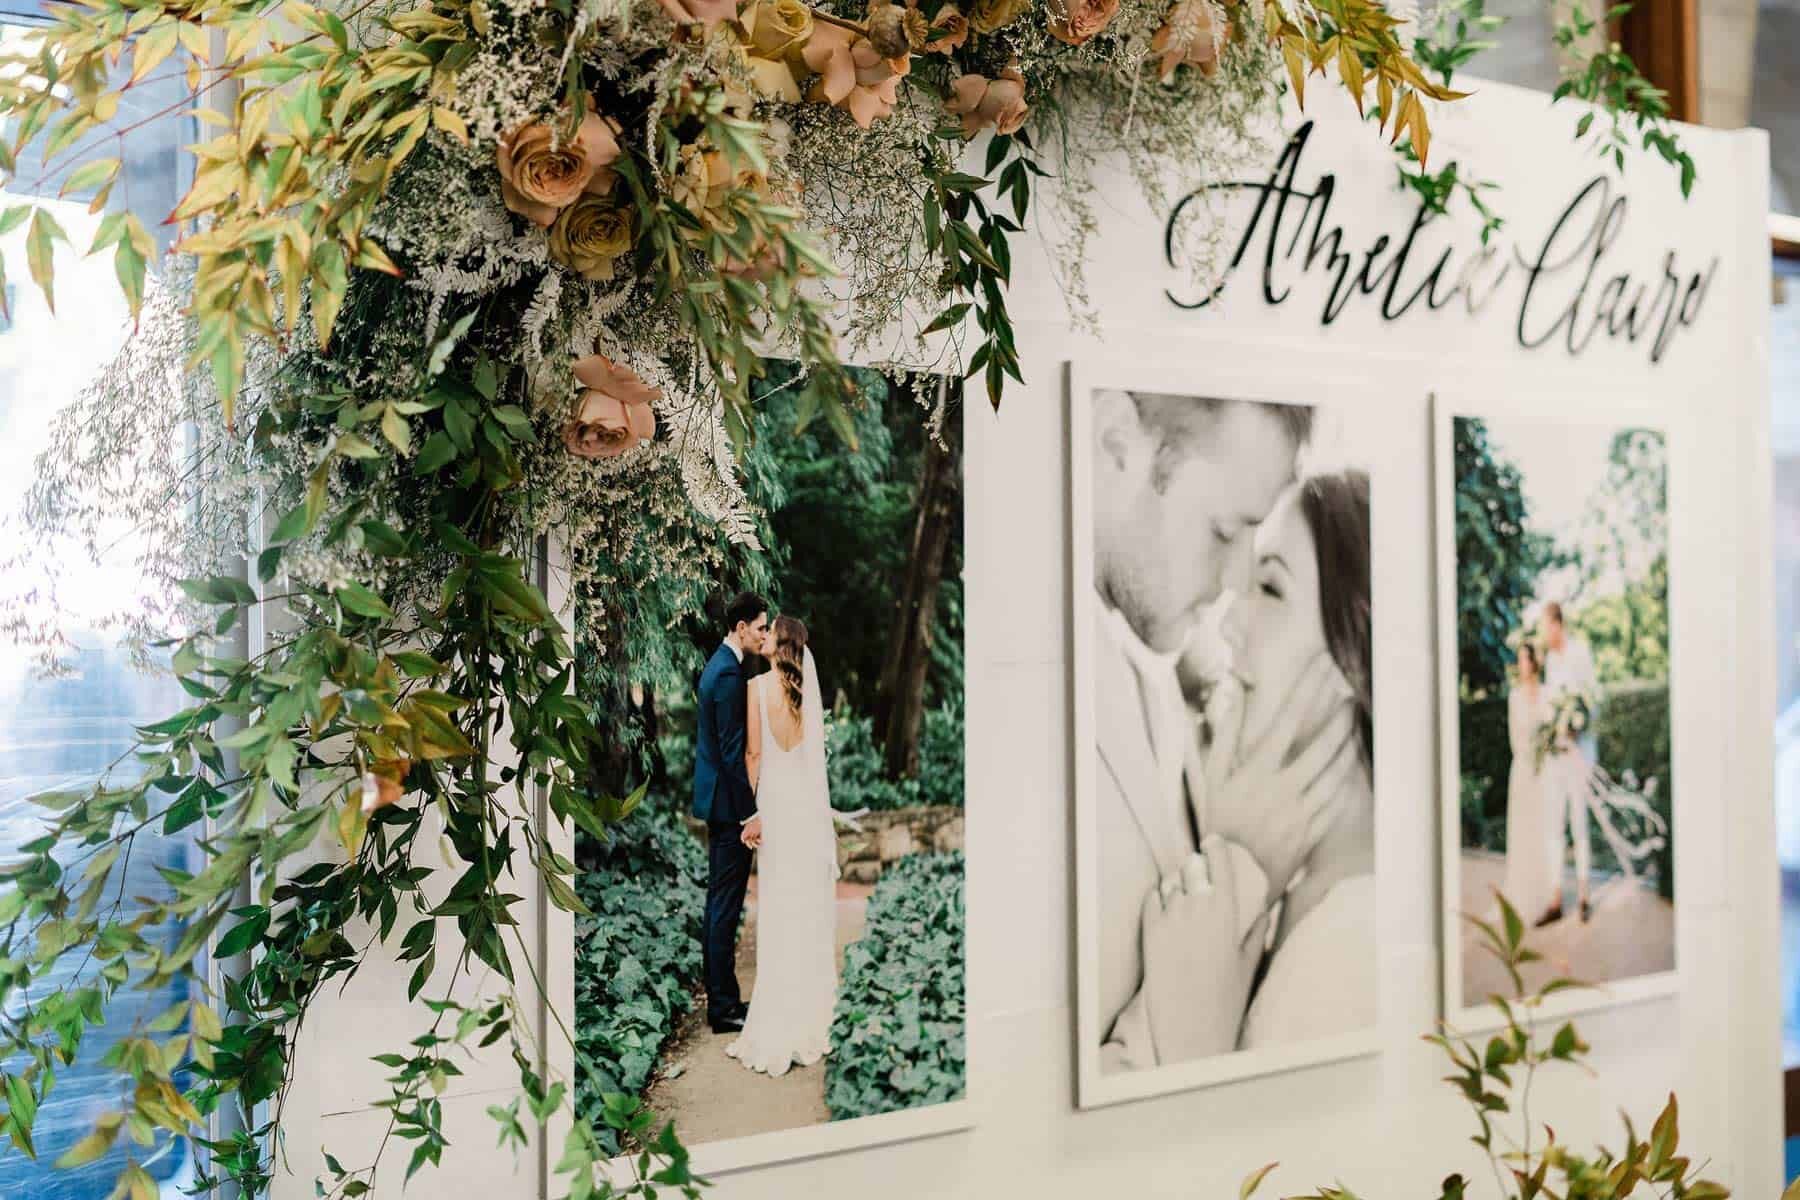 Perth's best boutique bridal fair - Wedding Upmarket 2019